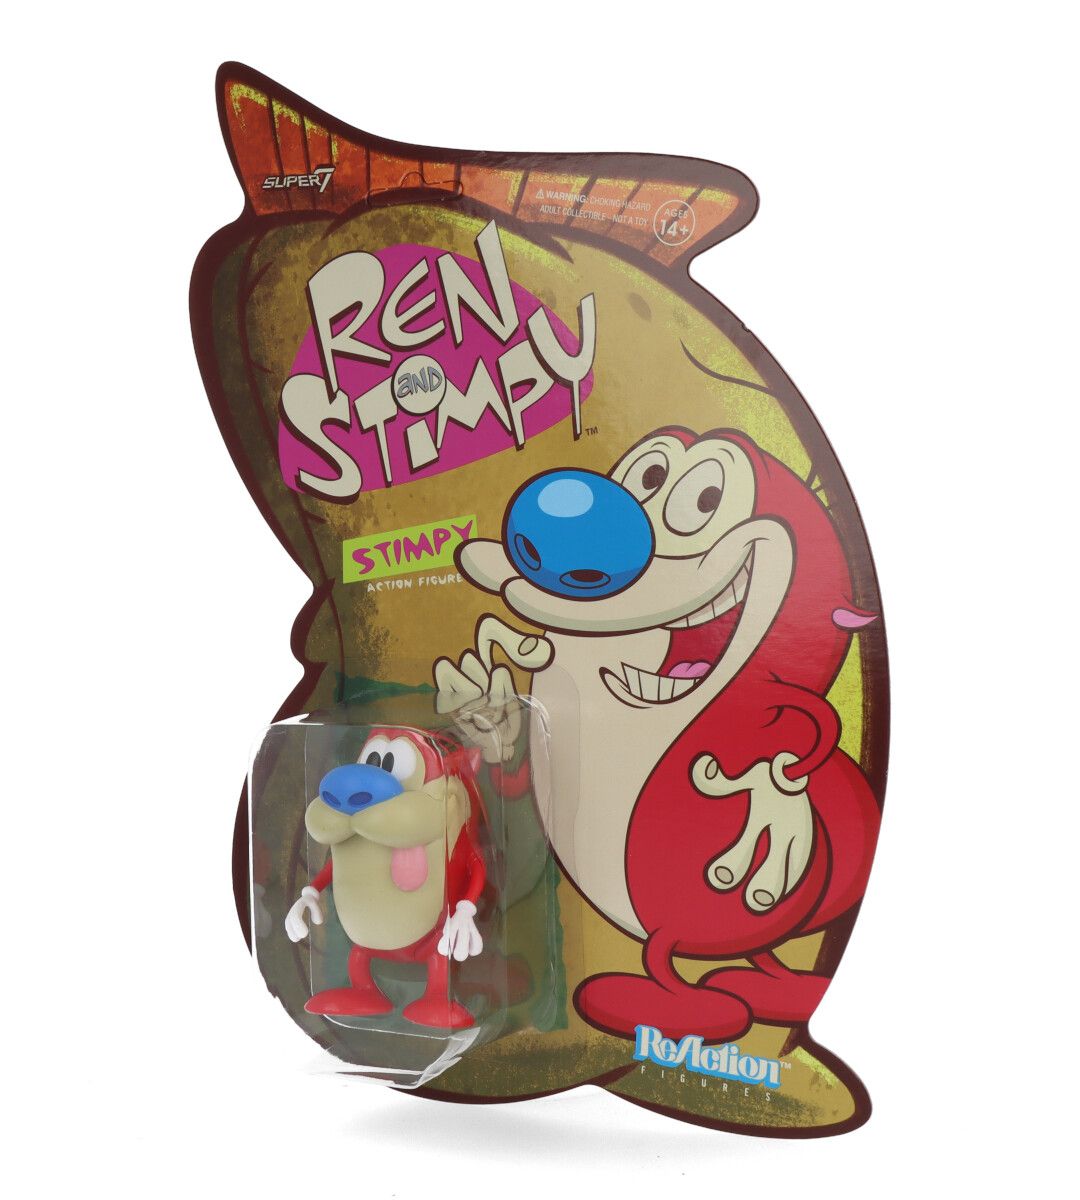 Stimpy (Ren & Stimpy) - ReAction figure